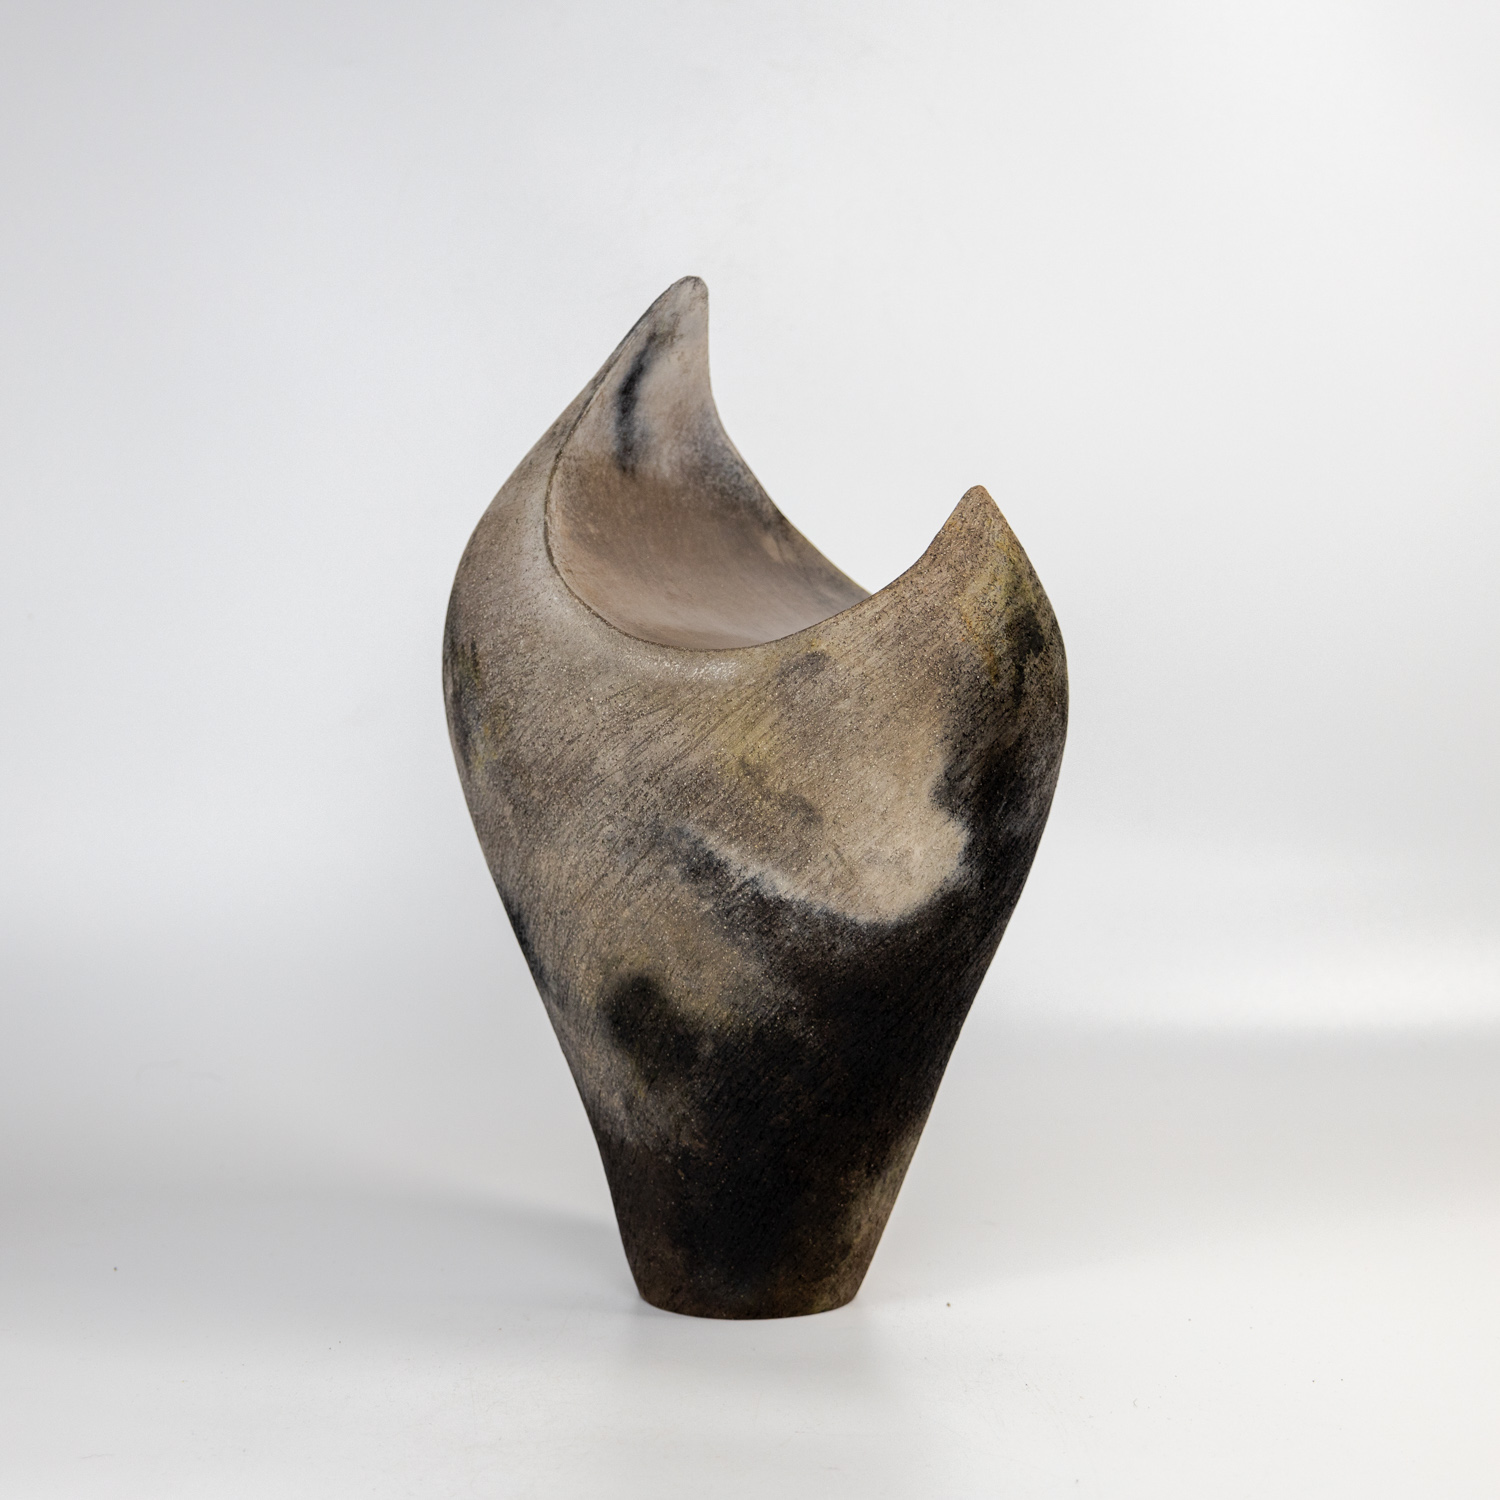 Heather Armstrong, Isthmus, ceramic,16x23x33cm